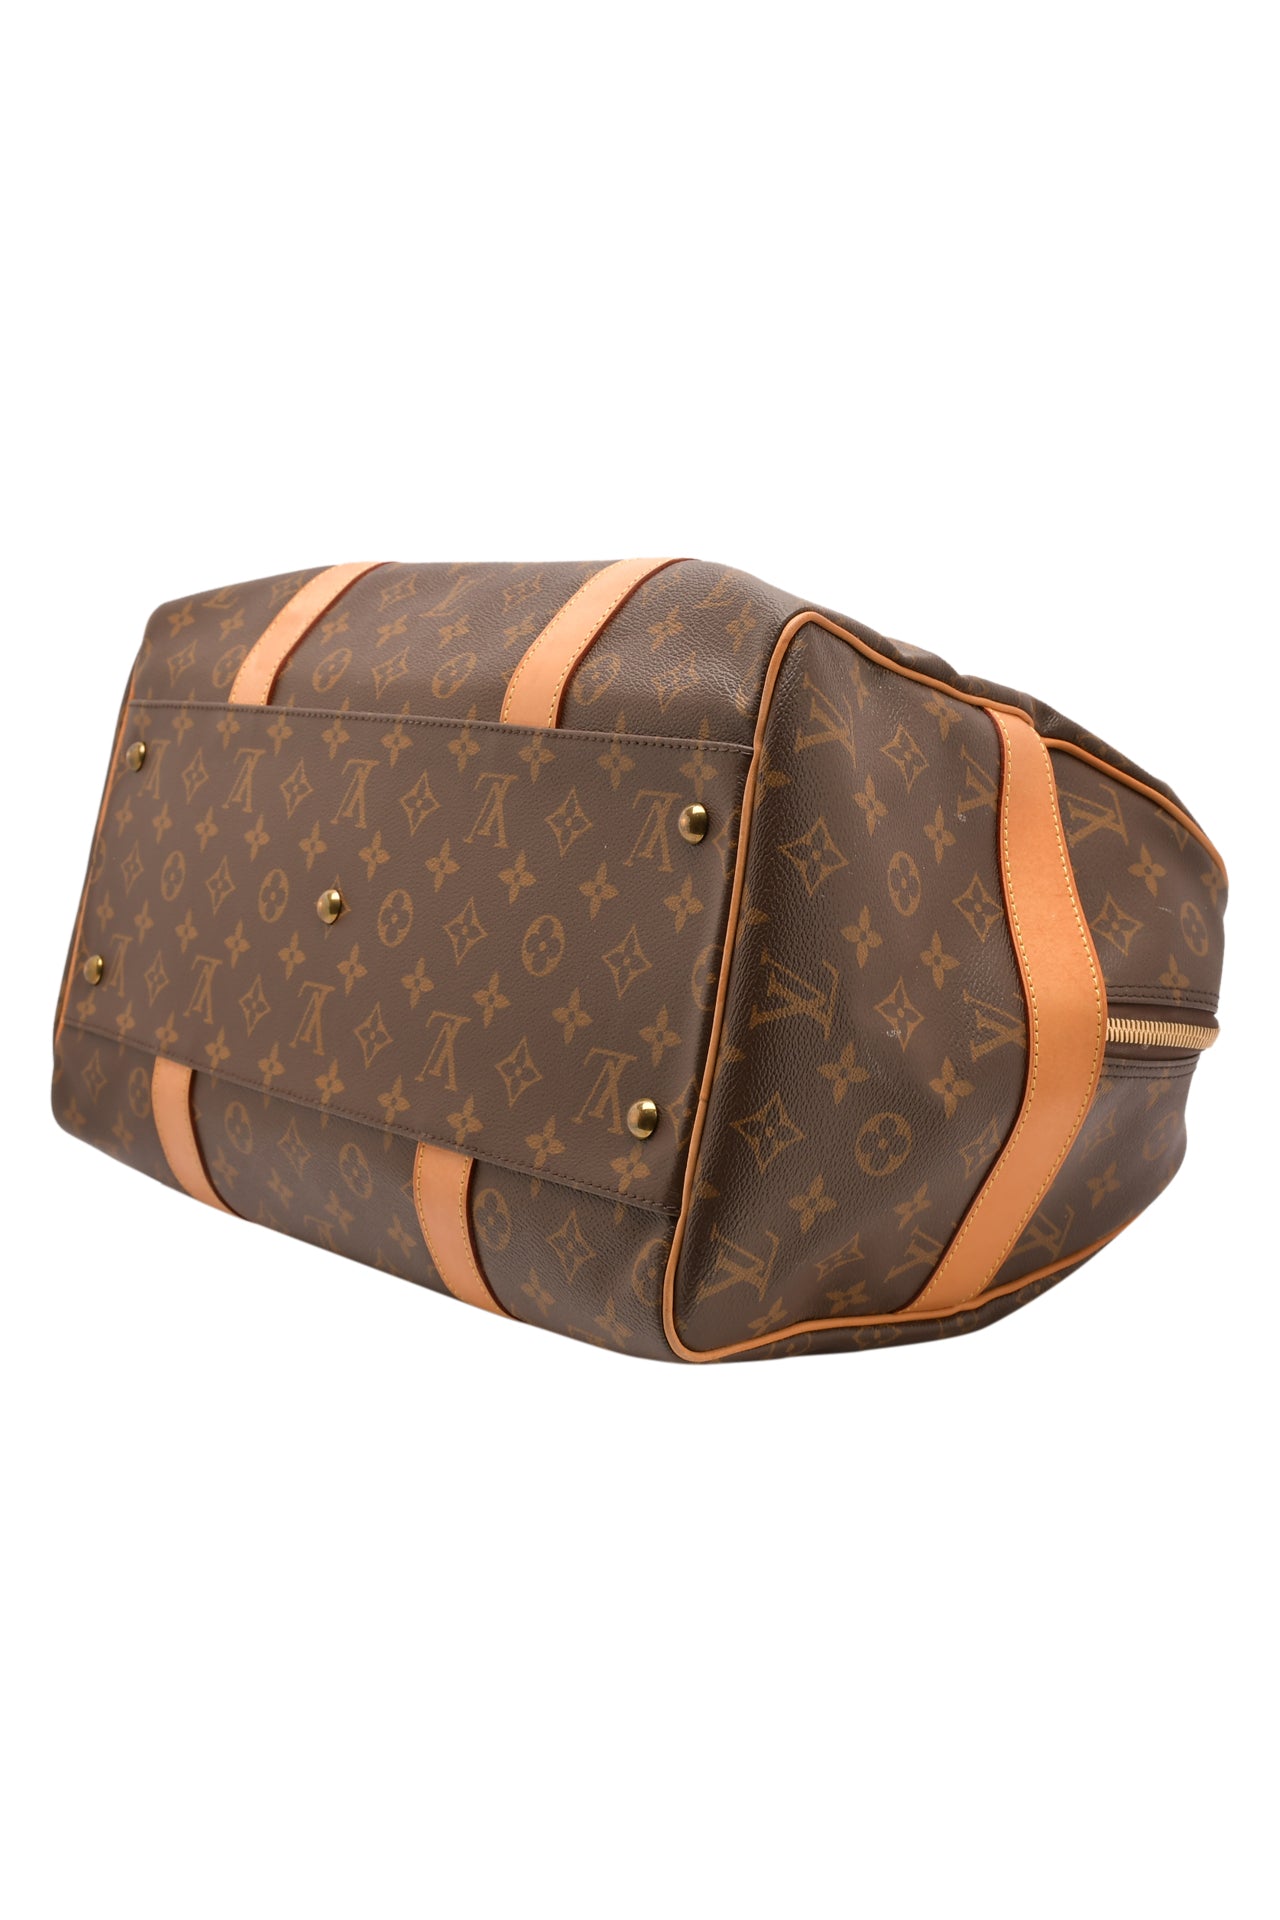 Louis Vuitton Monogram Carryall Bag